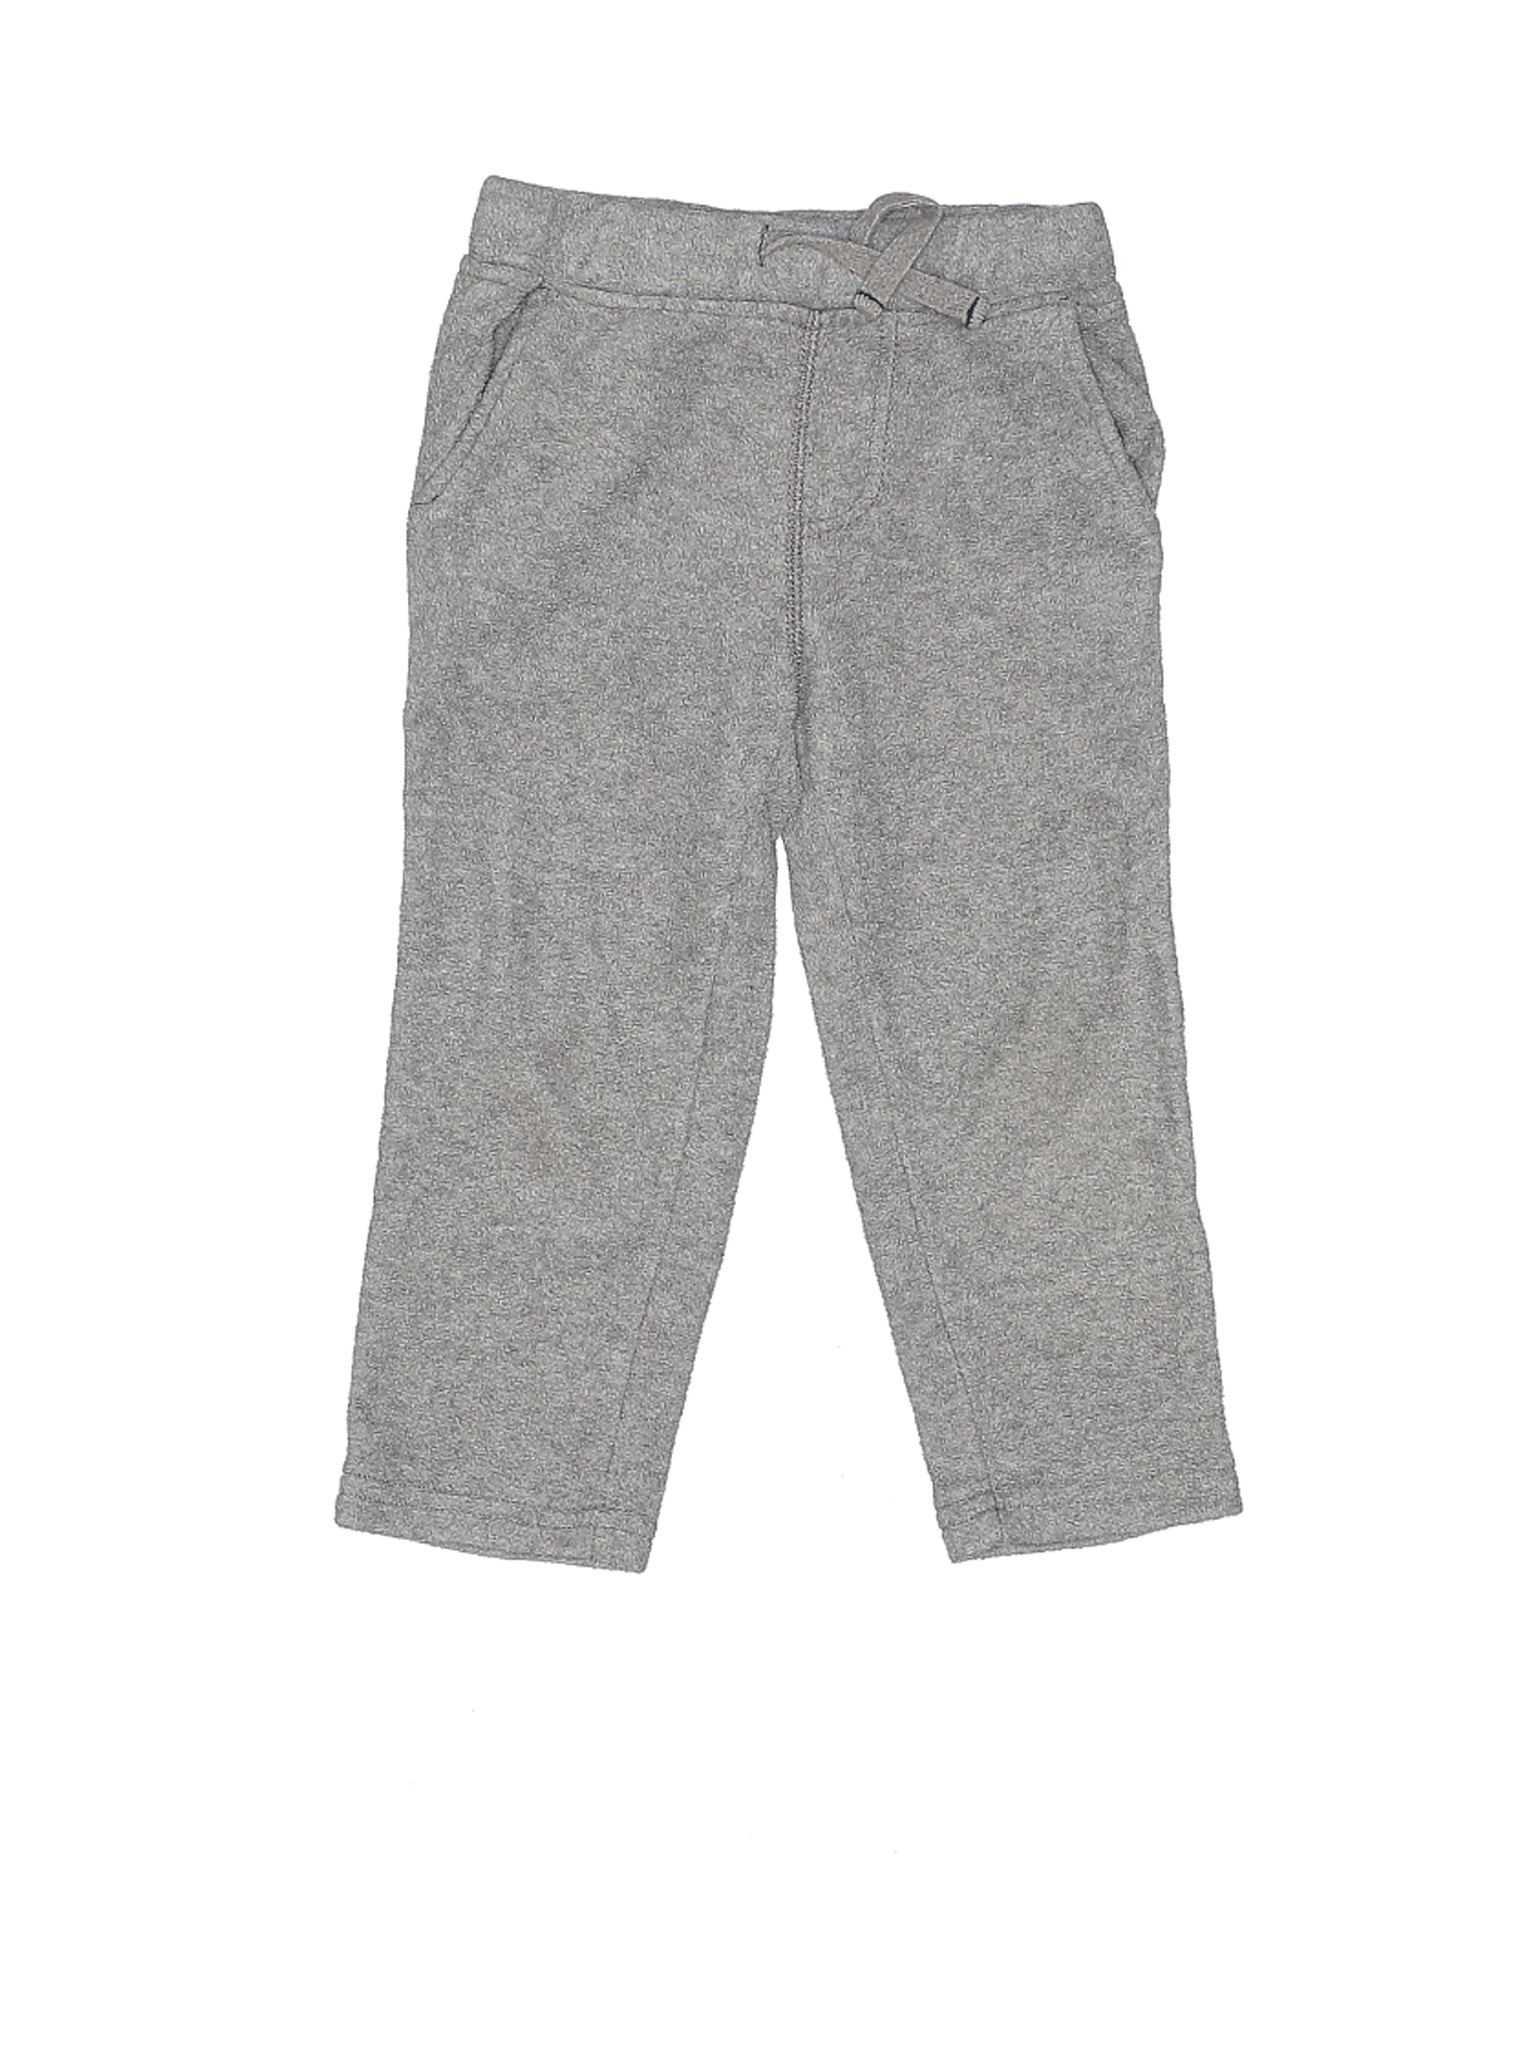 Carter's Boys Gray Casual Pants 3T | eBay